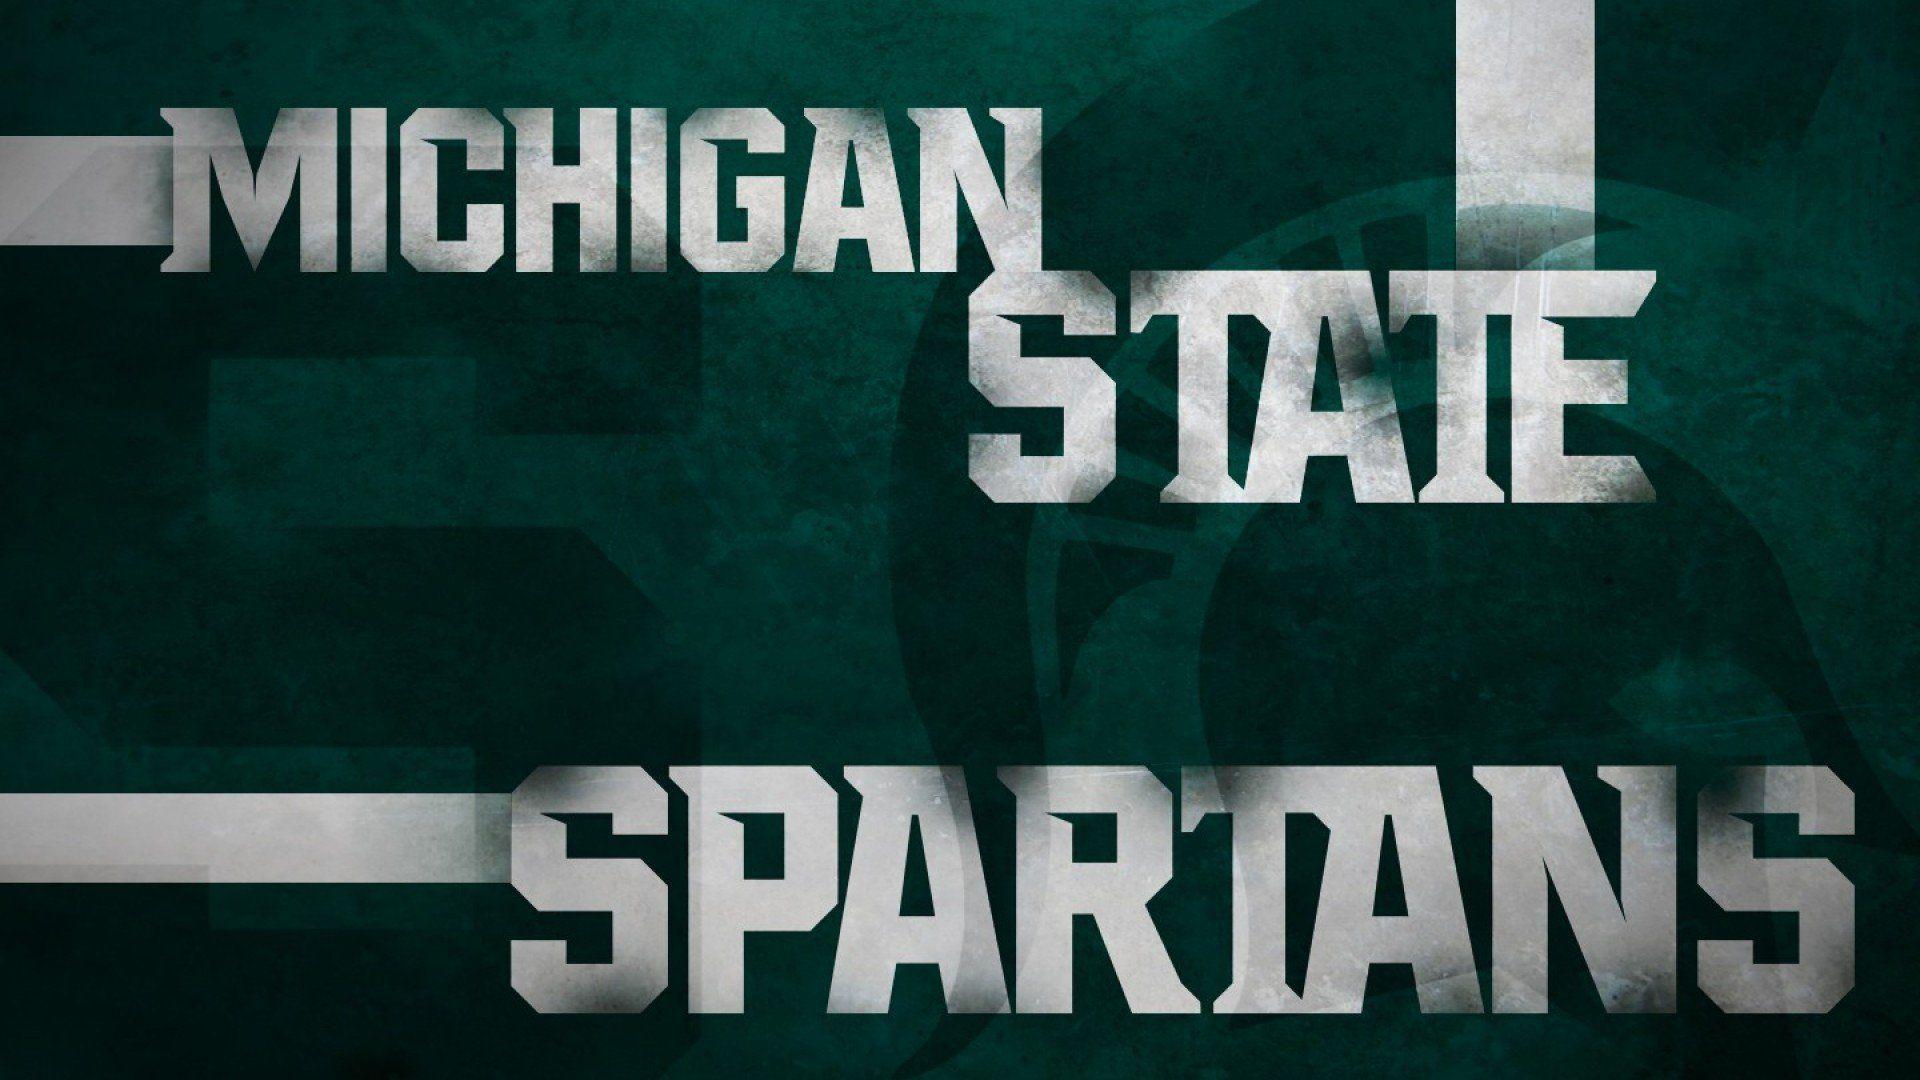 HD Michigan State Wallpaper. Wallpaper, Background, Image